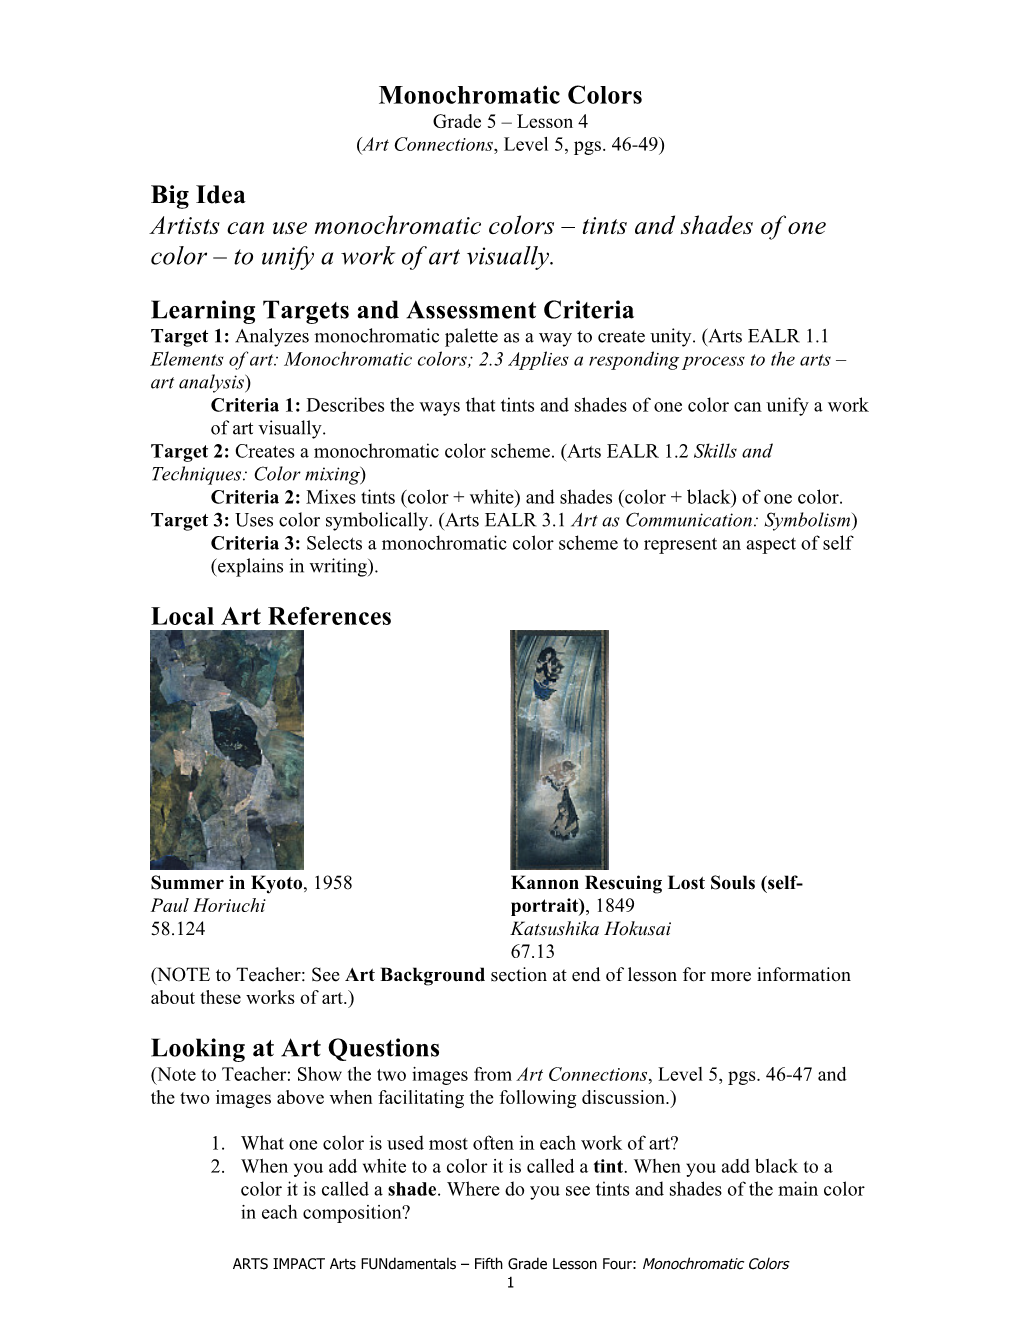 Monochromatic Colors Grade 5 – Lesson 4 (Art Connections, Level 5, Pgs